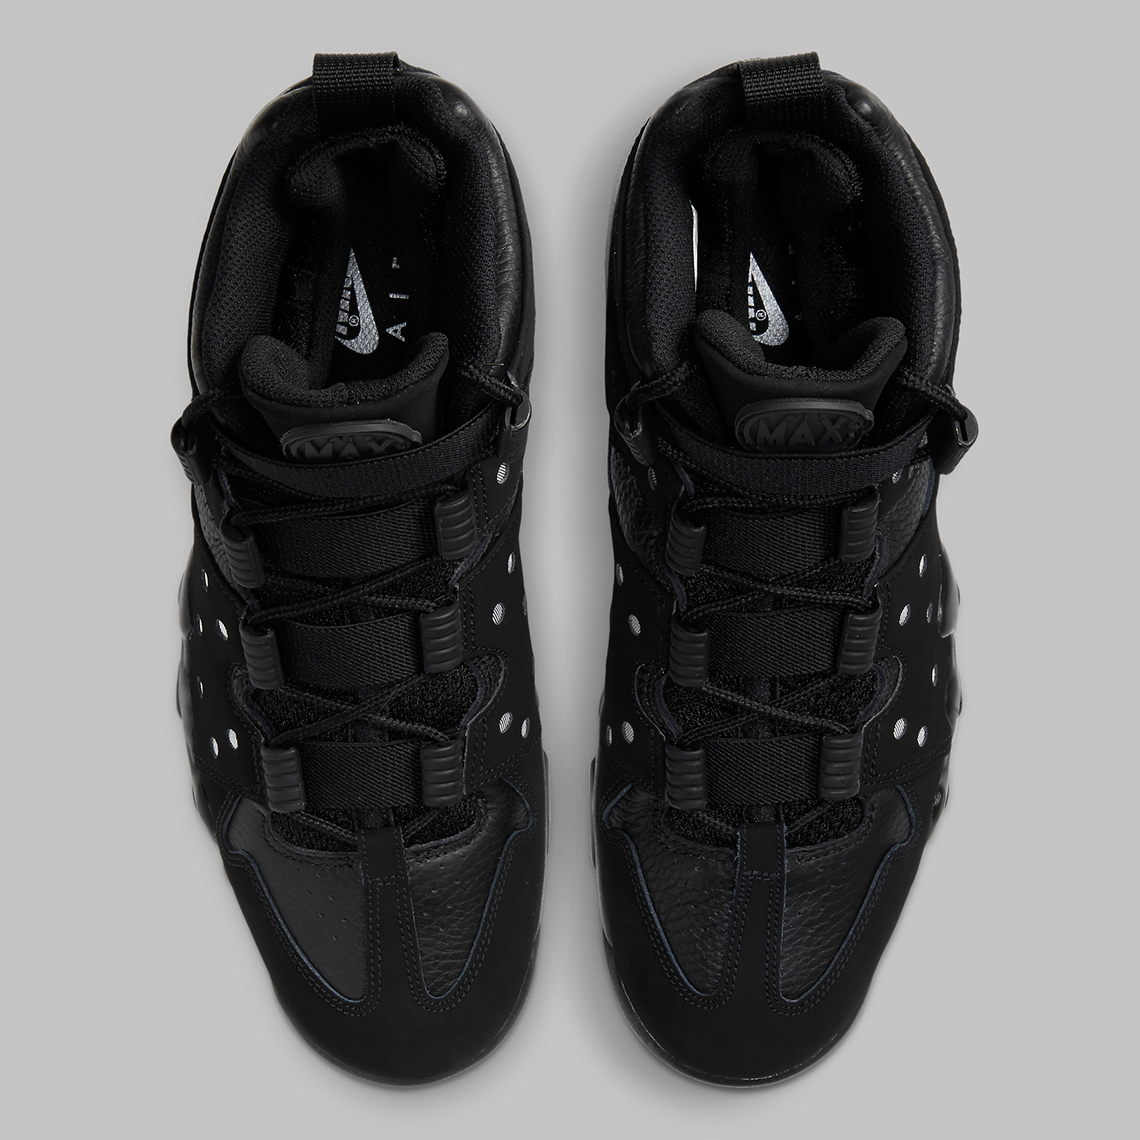 Nike Air Max CB 94 Black |